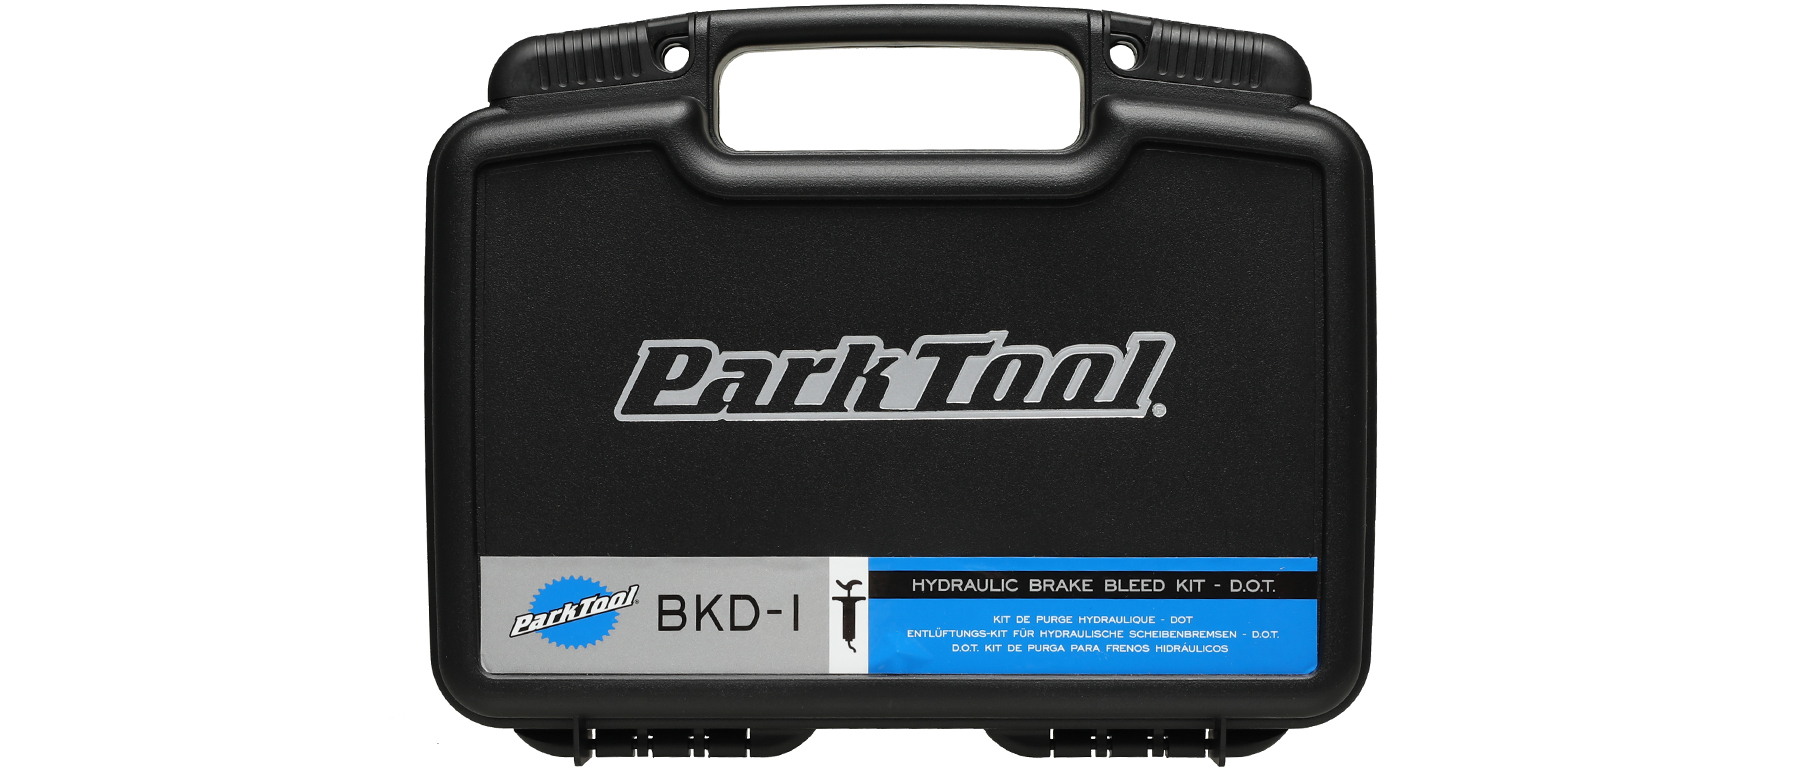 Park Tool BKD-1 Hydraulic Brake Bleed Kit- D.O.T.